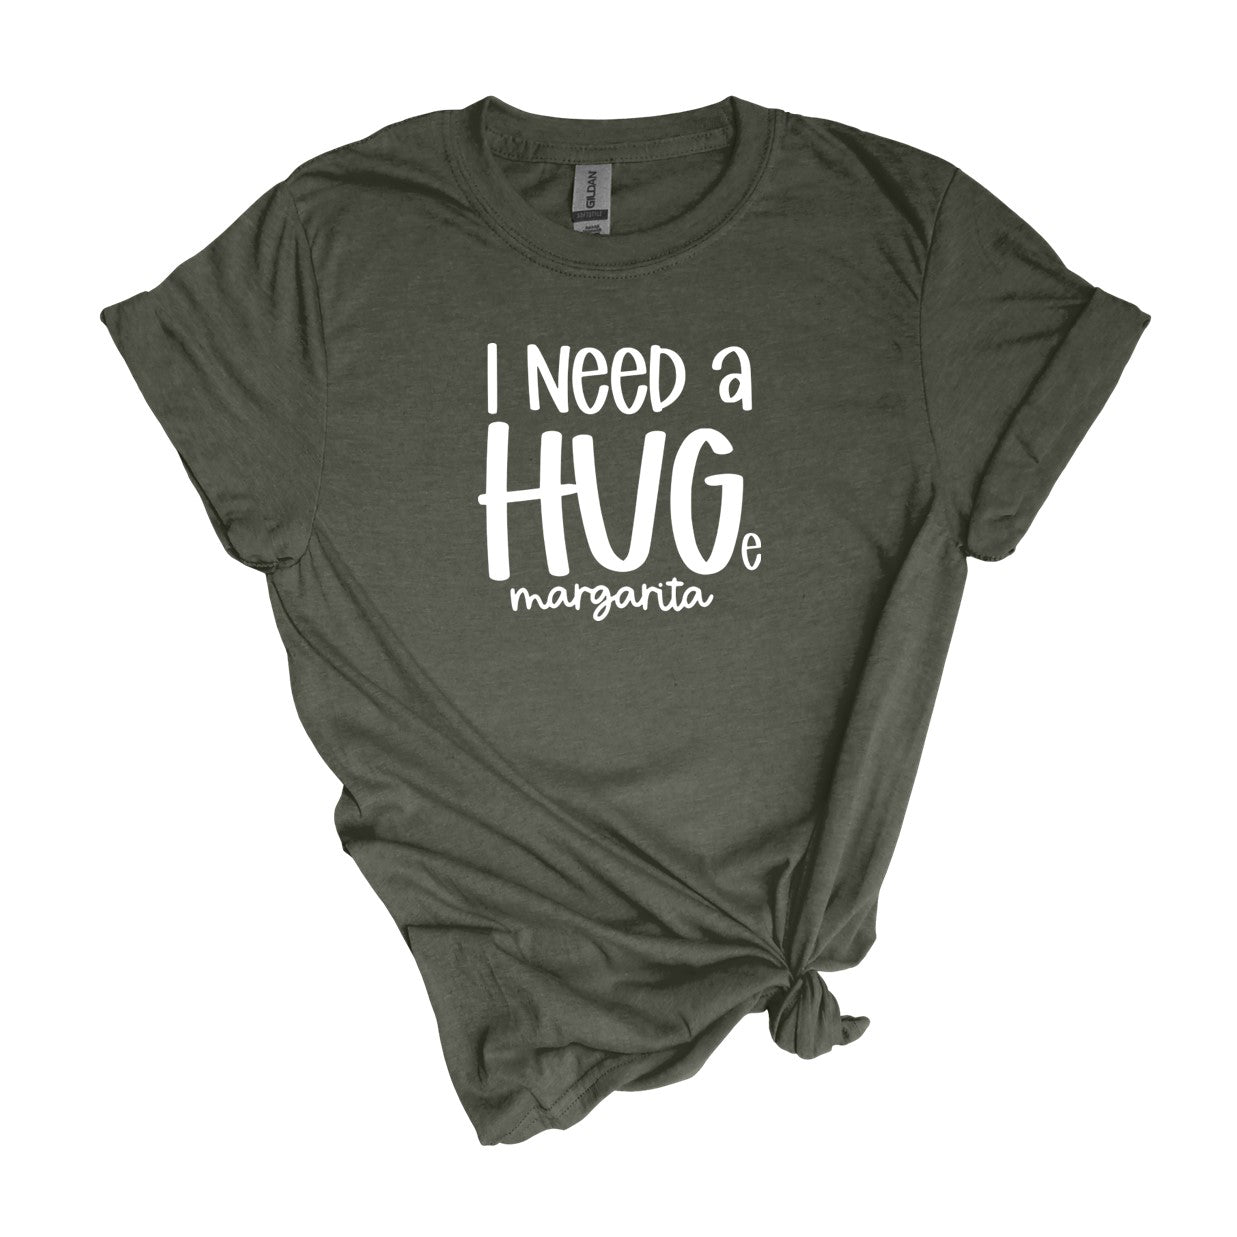 I NEED A HUGe margarita - soft t-shirt